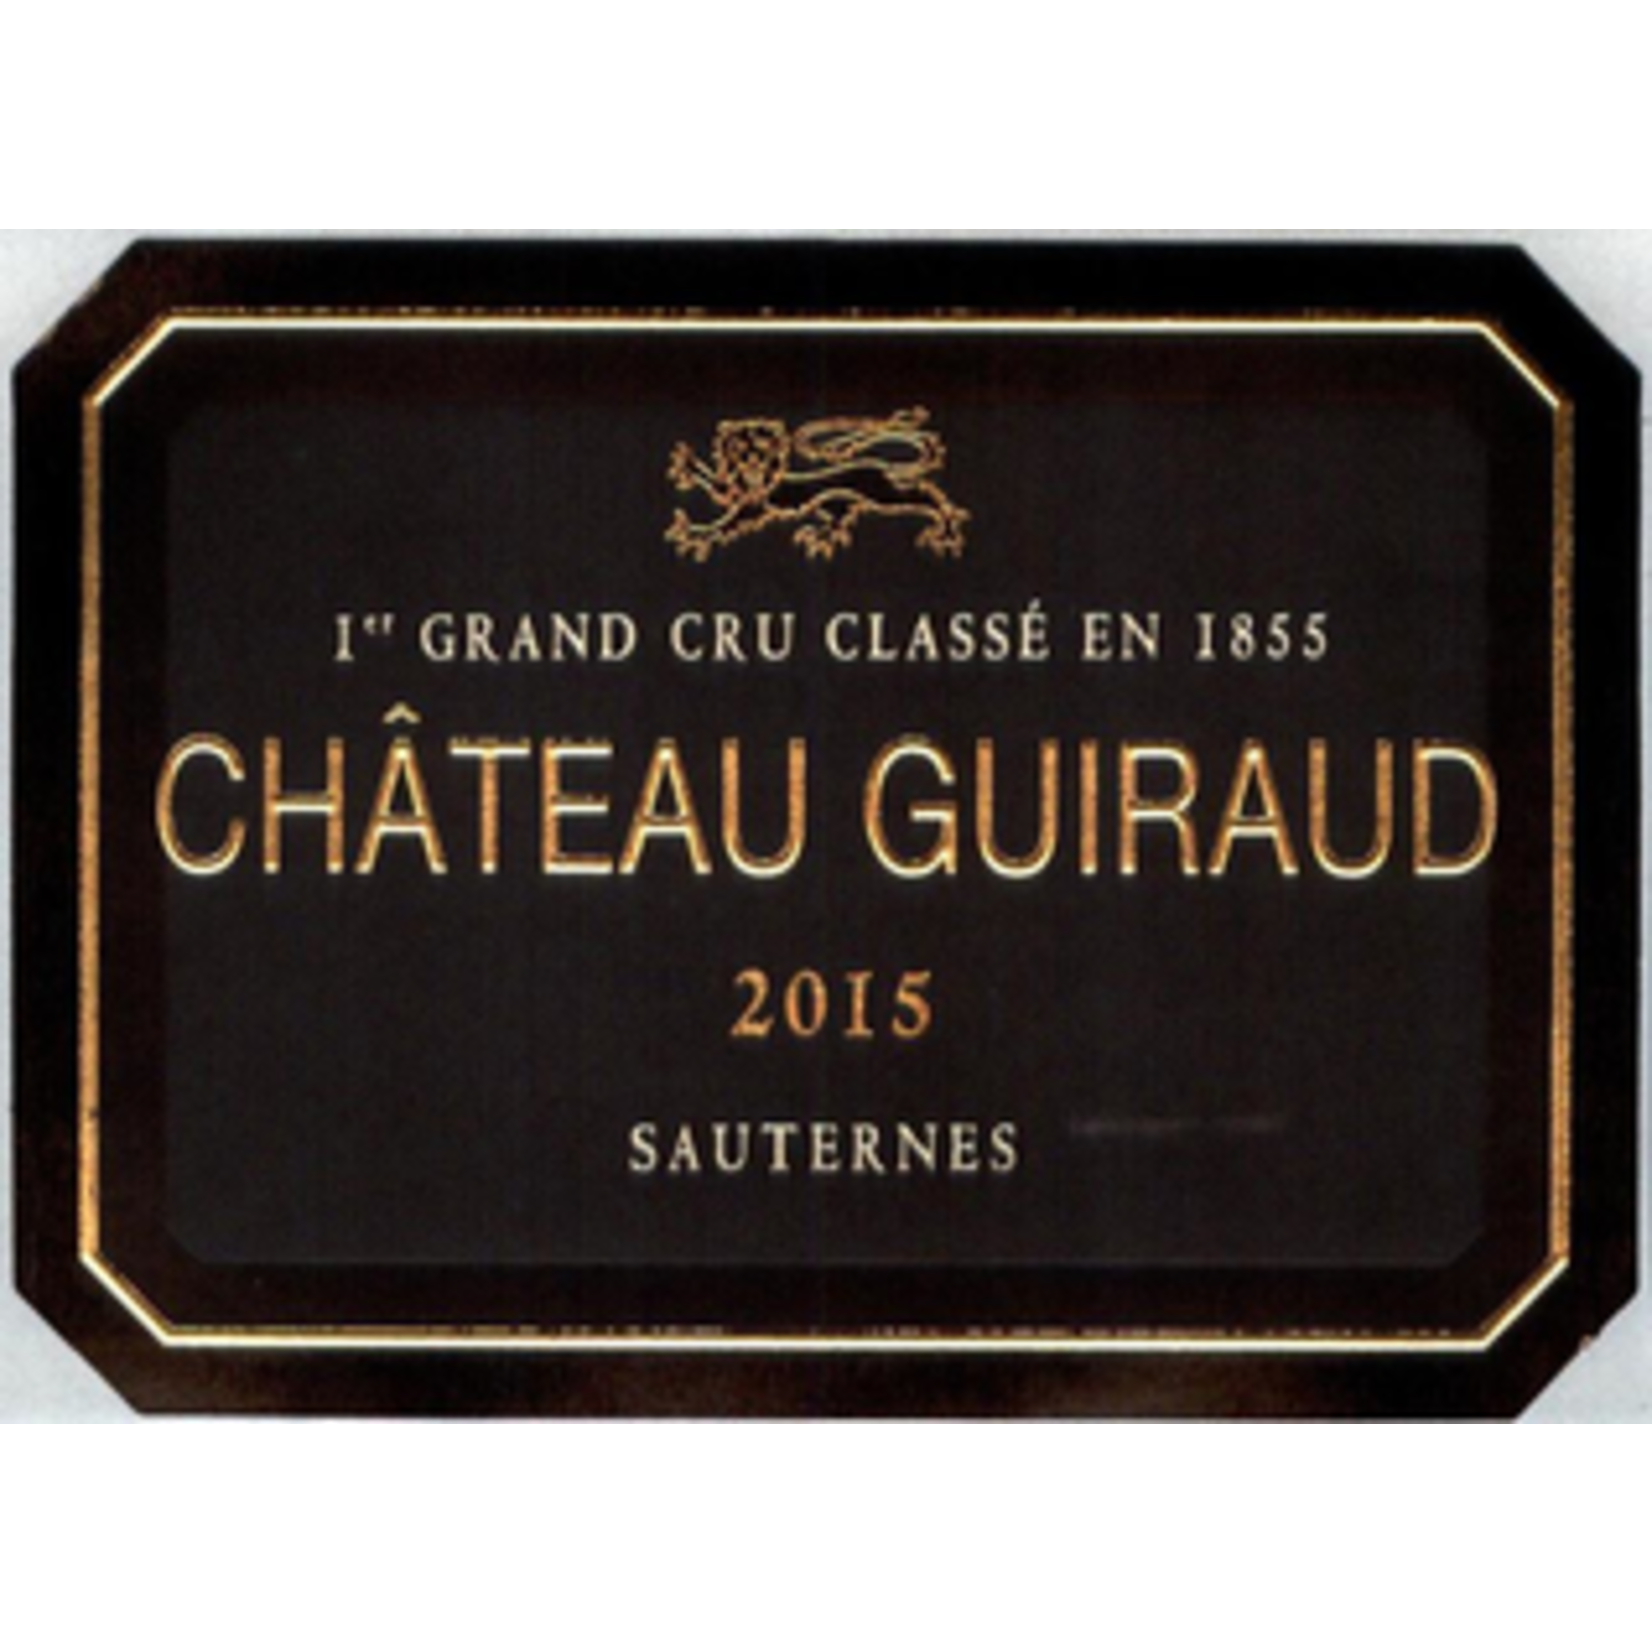 Wine Chateau Guiraud 2015 375ml